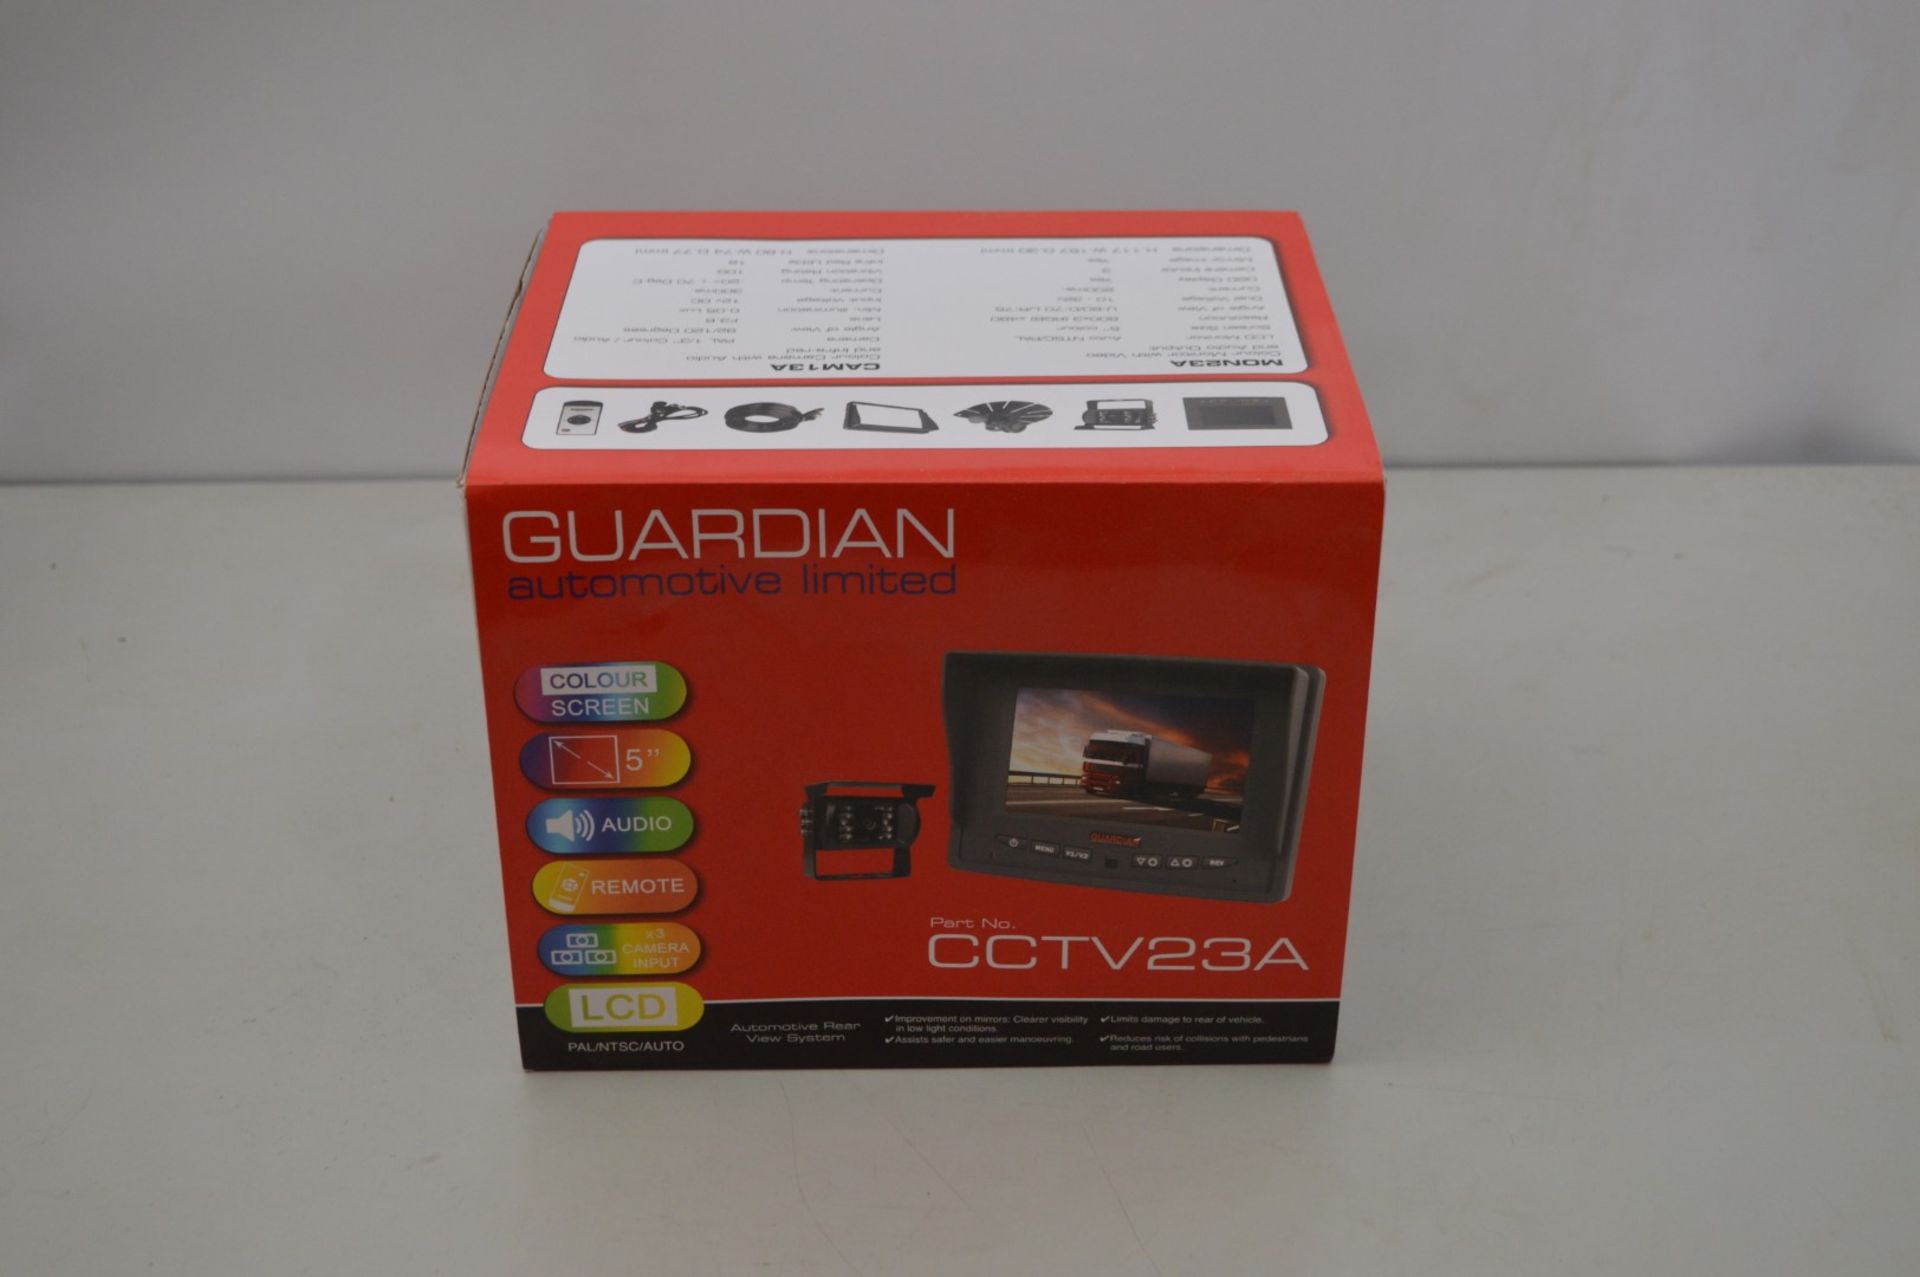 1 x Guardian CCTV23A Reverse Camera System - Ref RC152